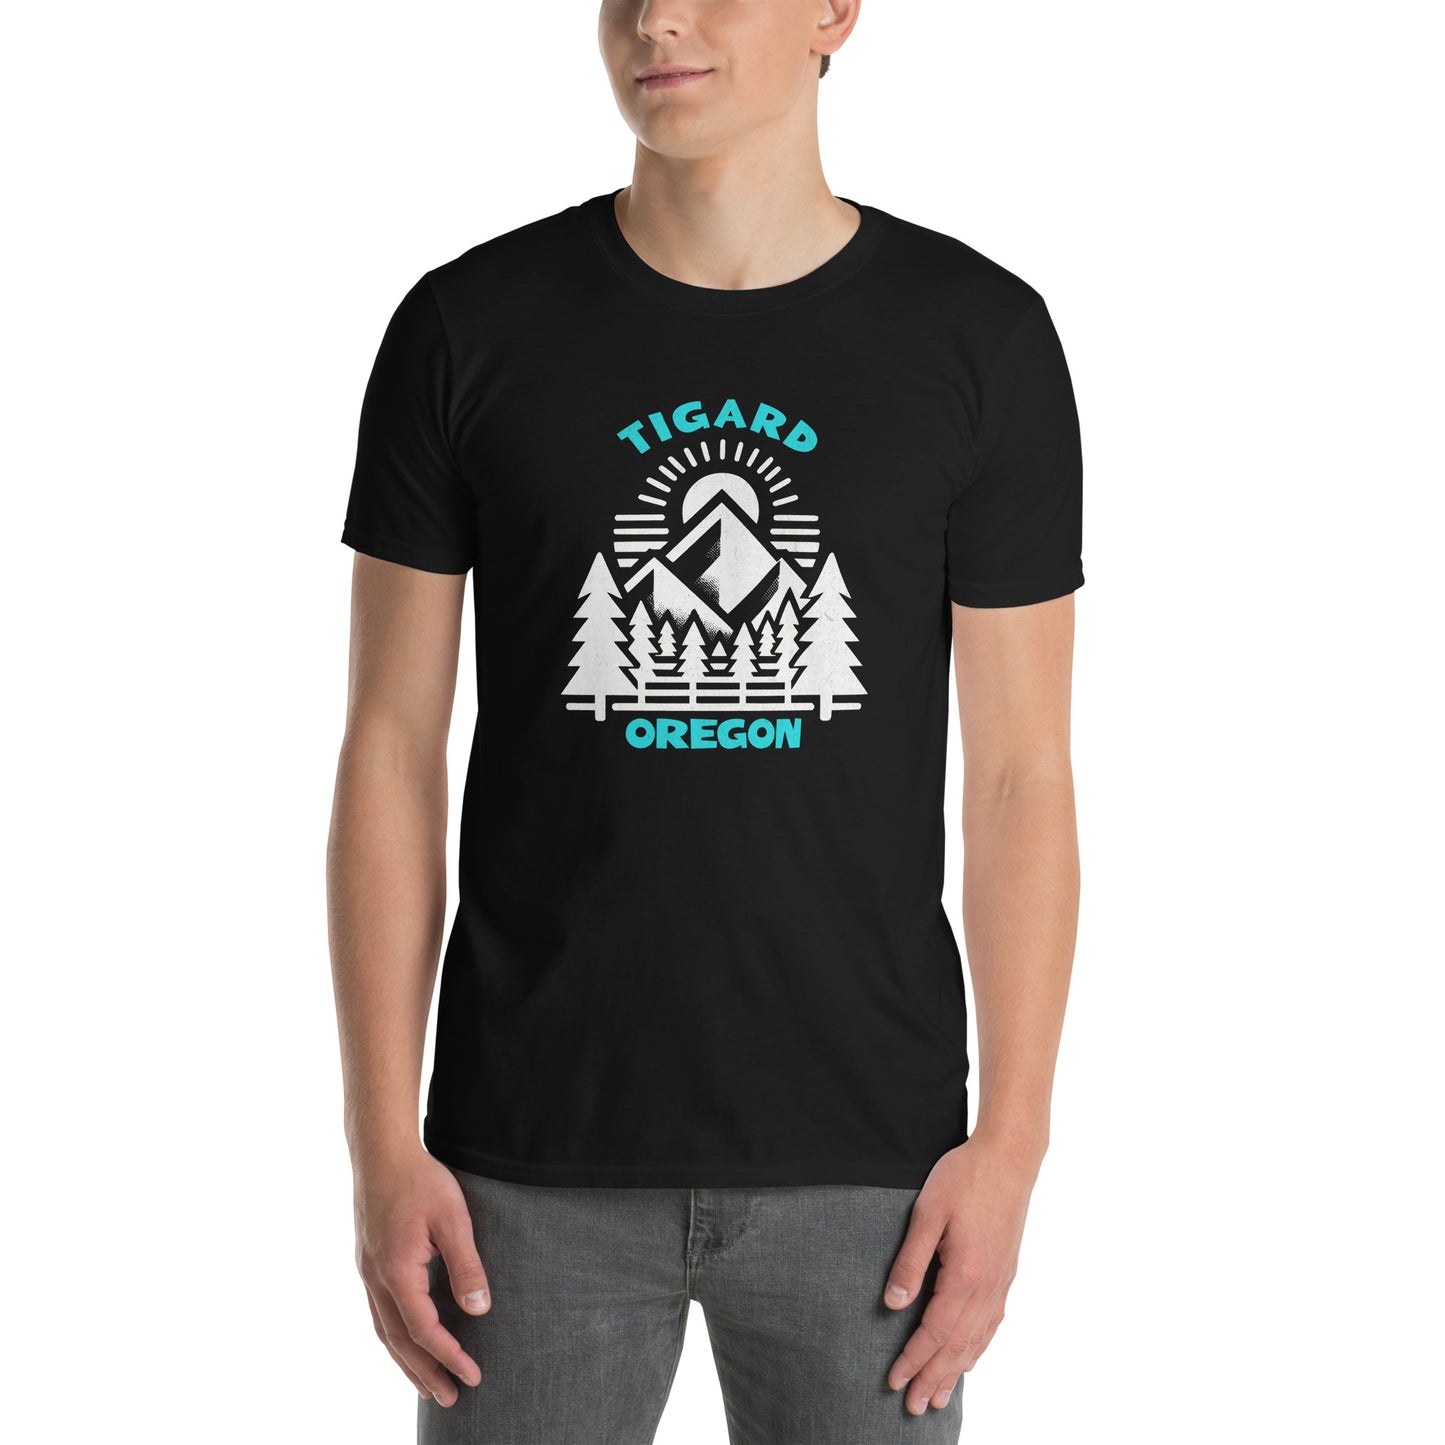 Tigard - Featured Cities - Short-Sleeve Unisex T-Shirt